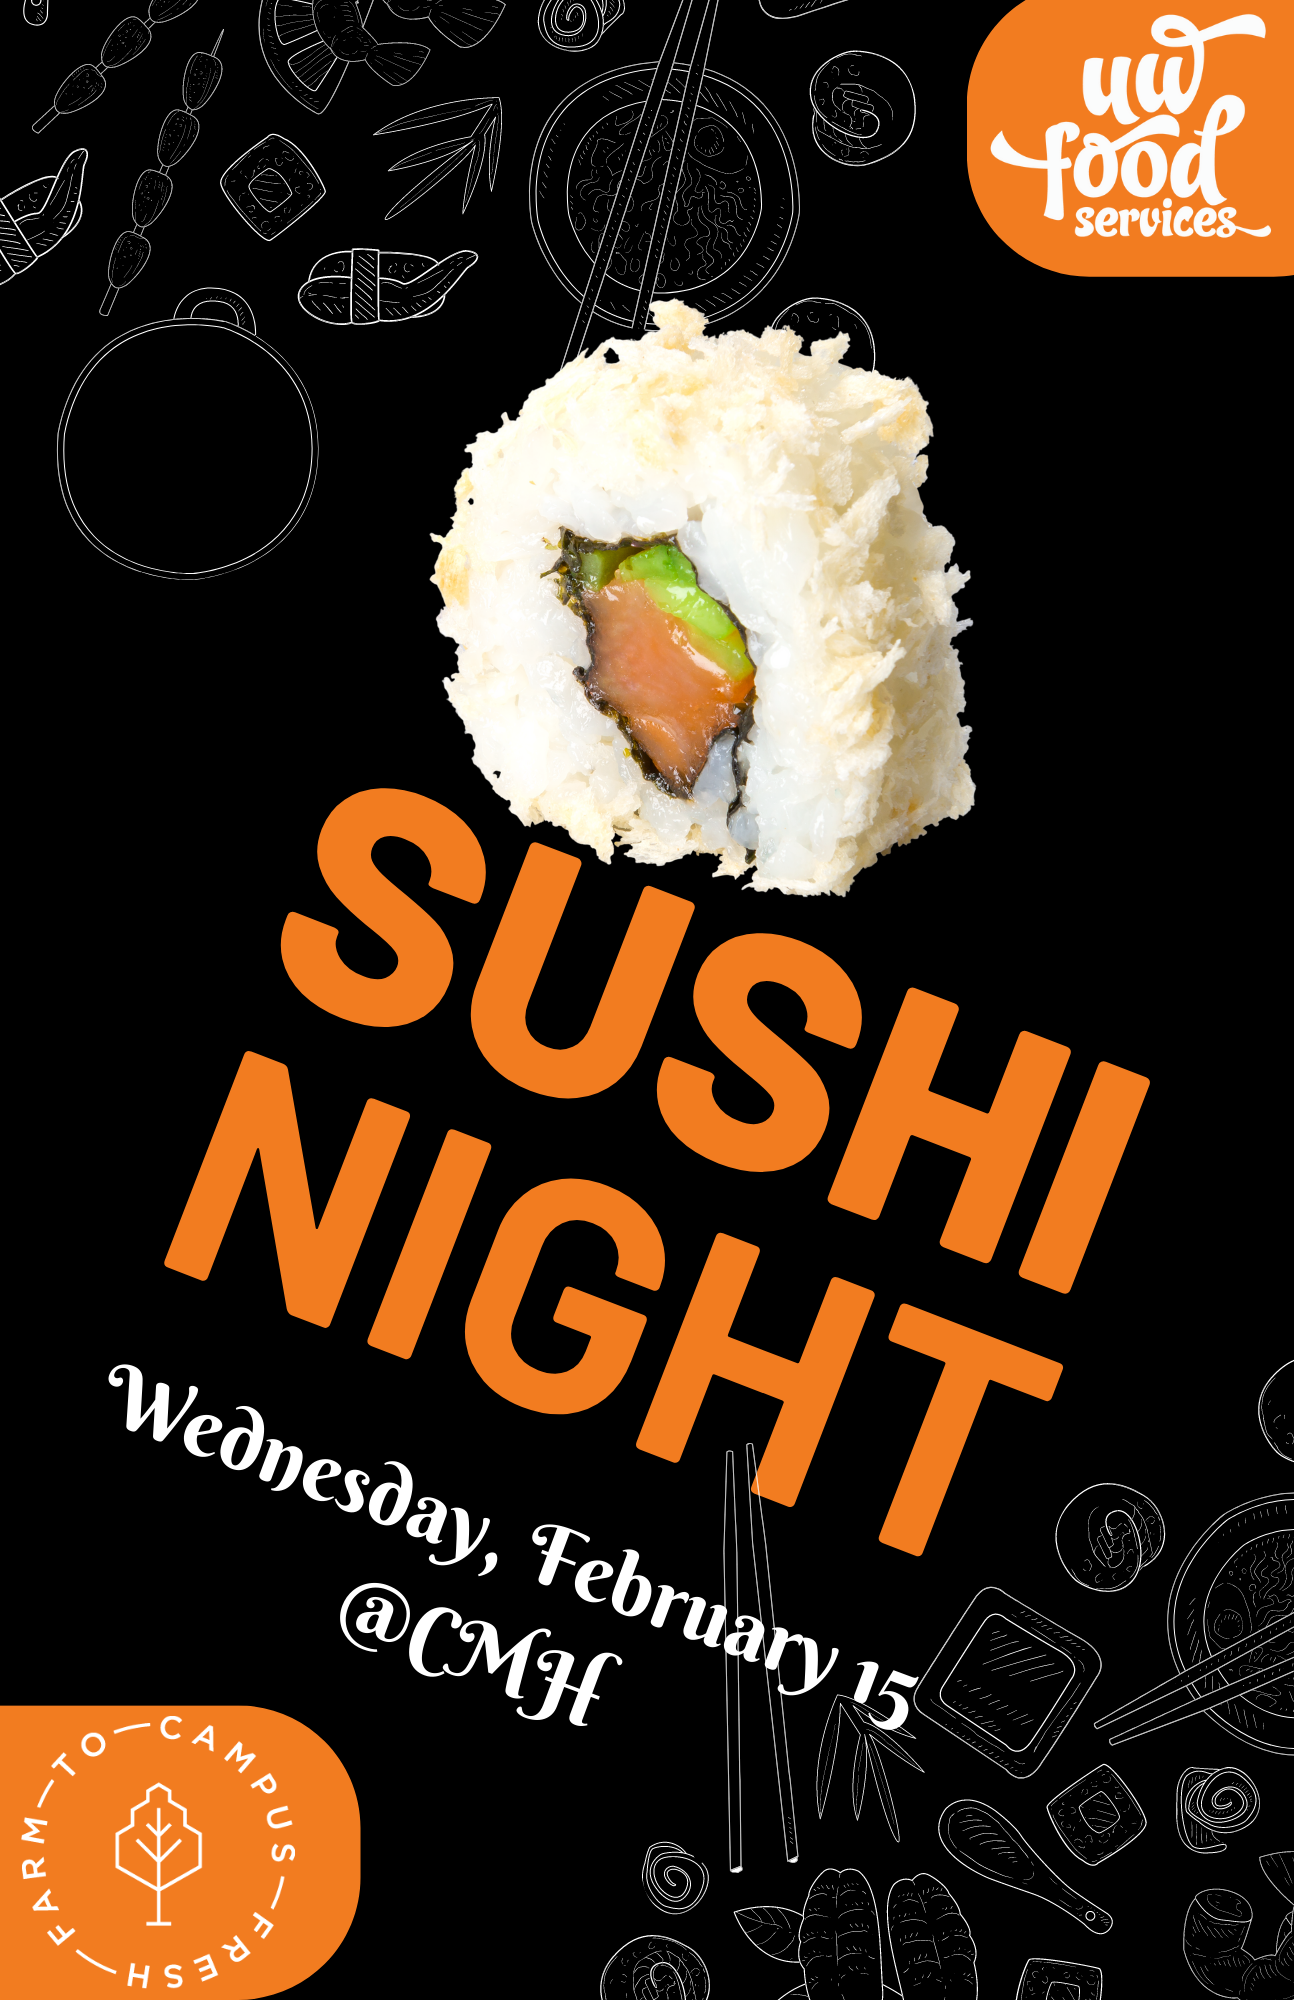 Sushi Night poster